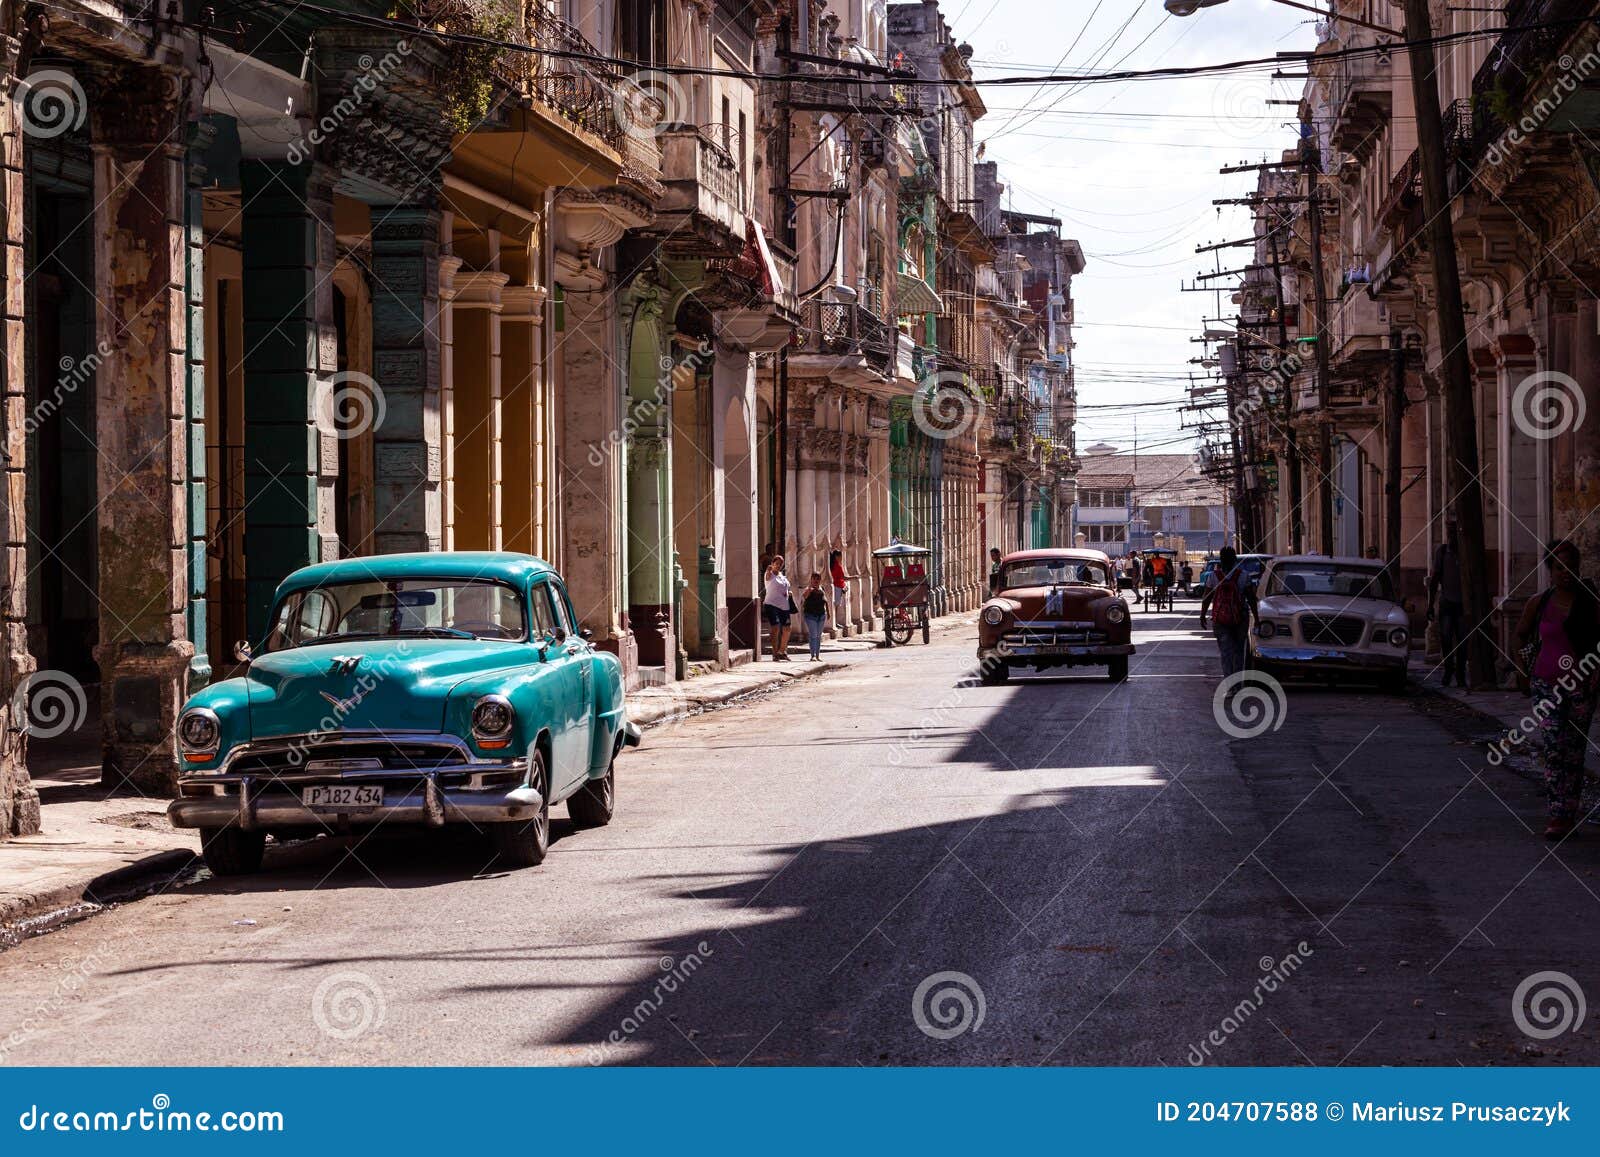 HAVANA, CUBA - DECEMBER 10, 2019: Havana Cuba Classic Cars. Typcal Havana Urban Scene with Colorful Buildings and Cars Editorial Stock Photo - Image of classic, landmark: 204707588